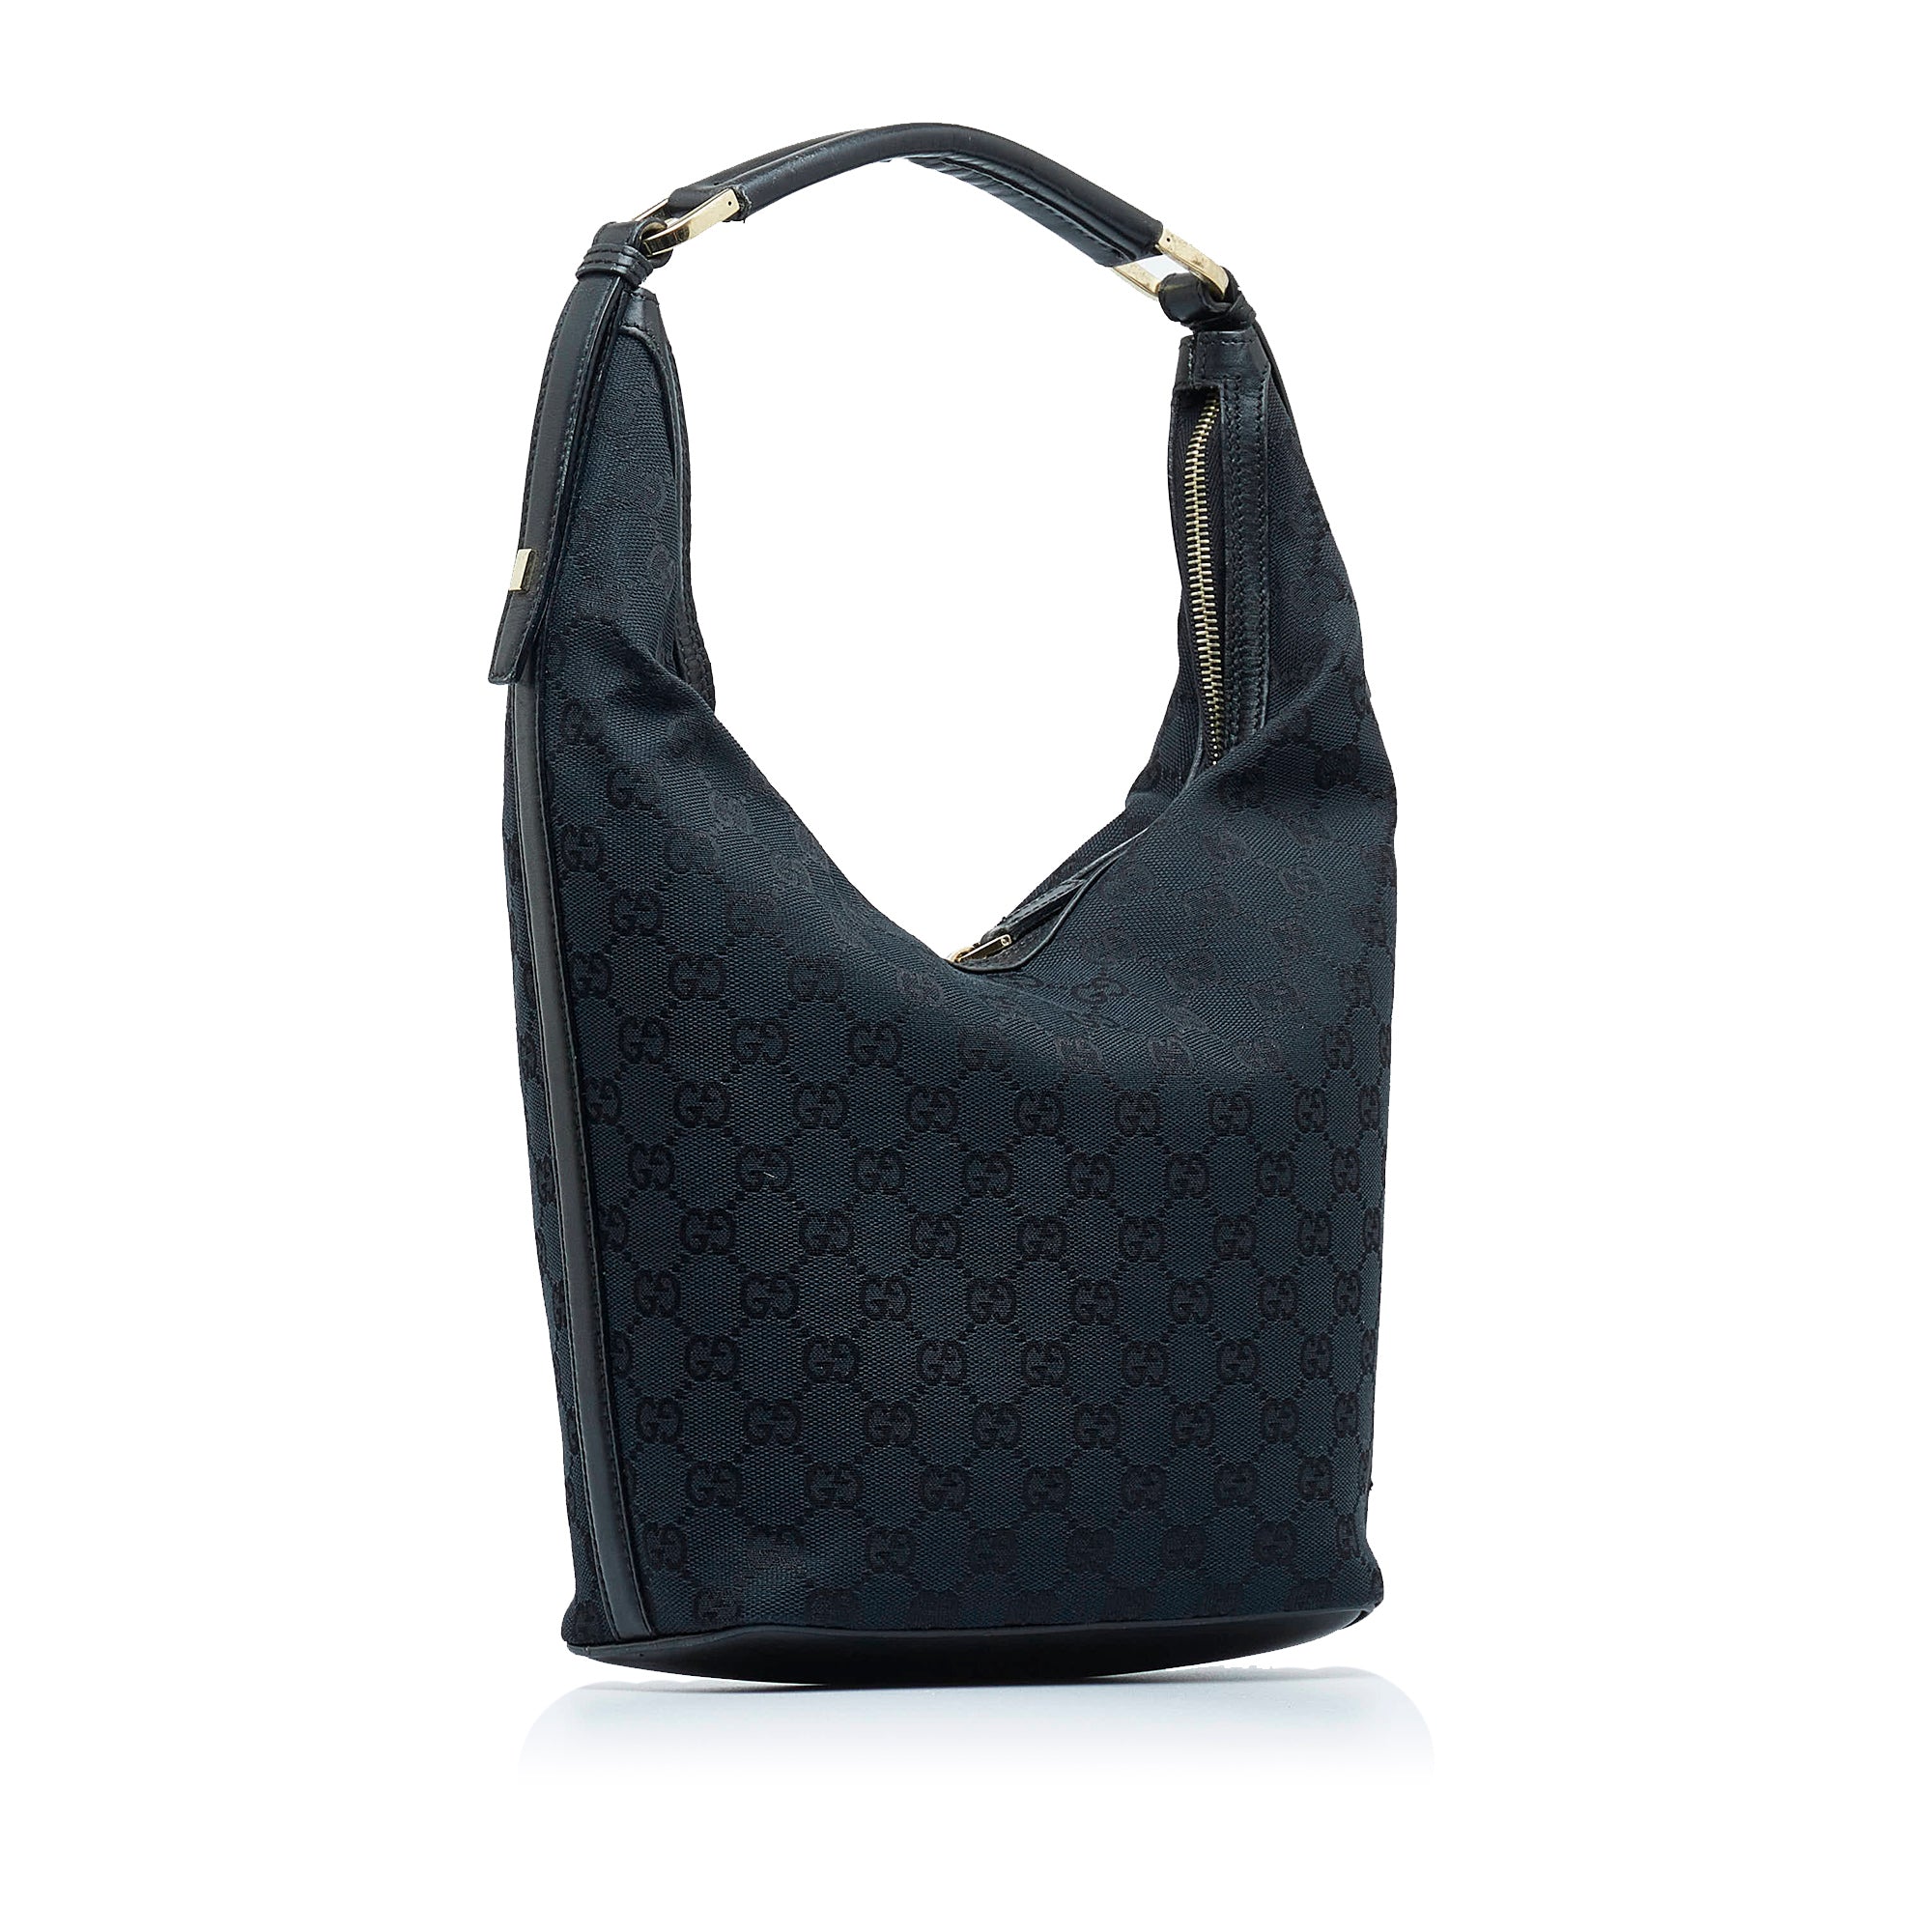 Gucci - Authenticated Hobo Handbag - Cloth Black Plain for Women, Good Condition